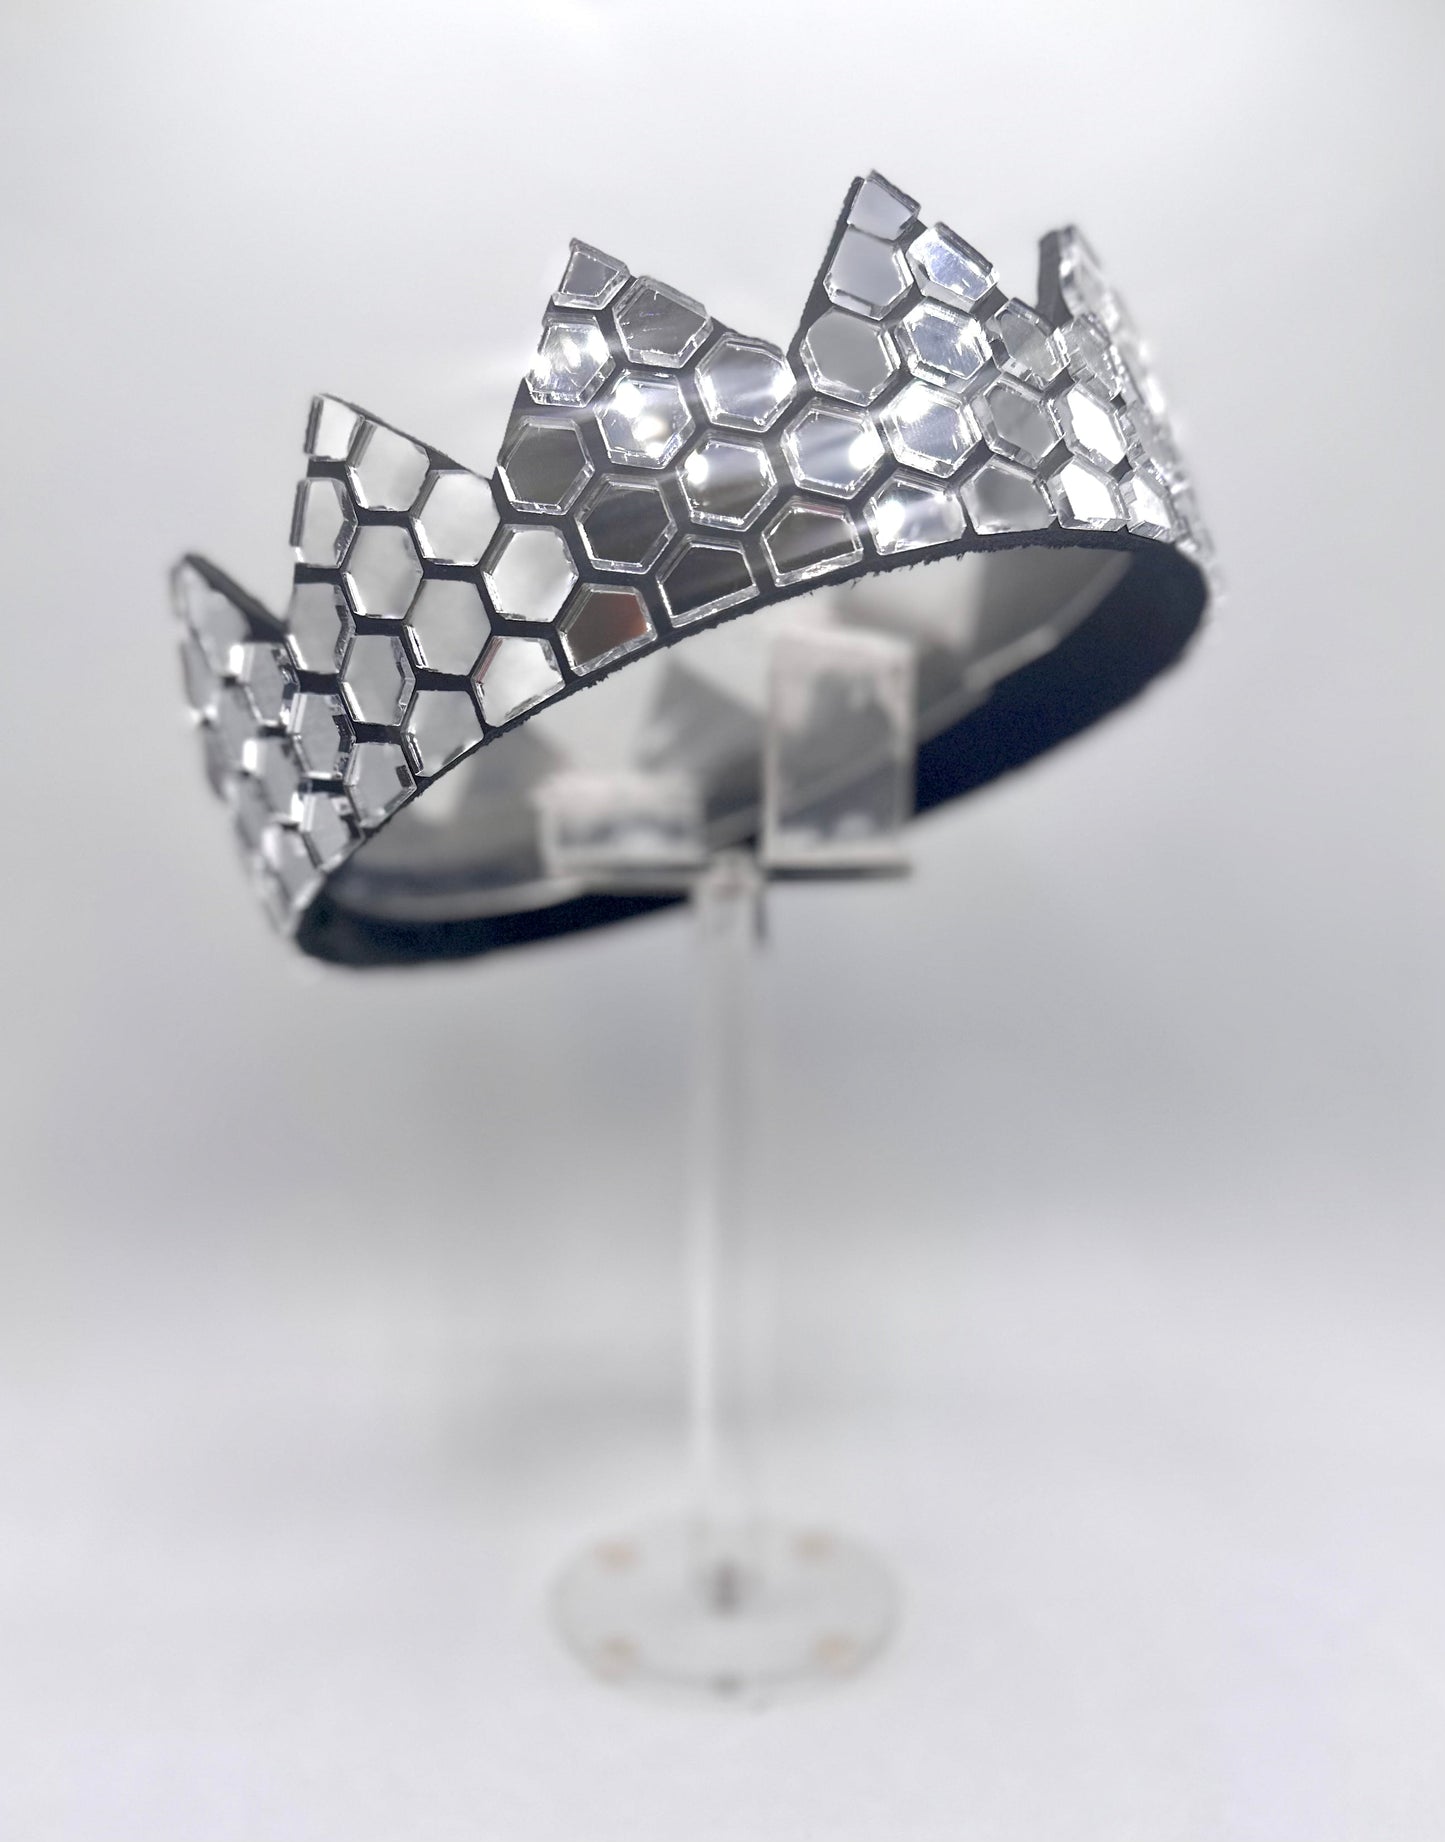 Silver Honeycomb Mirror Crown on Black